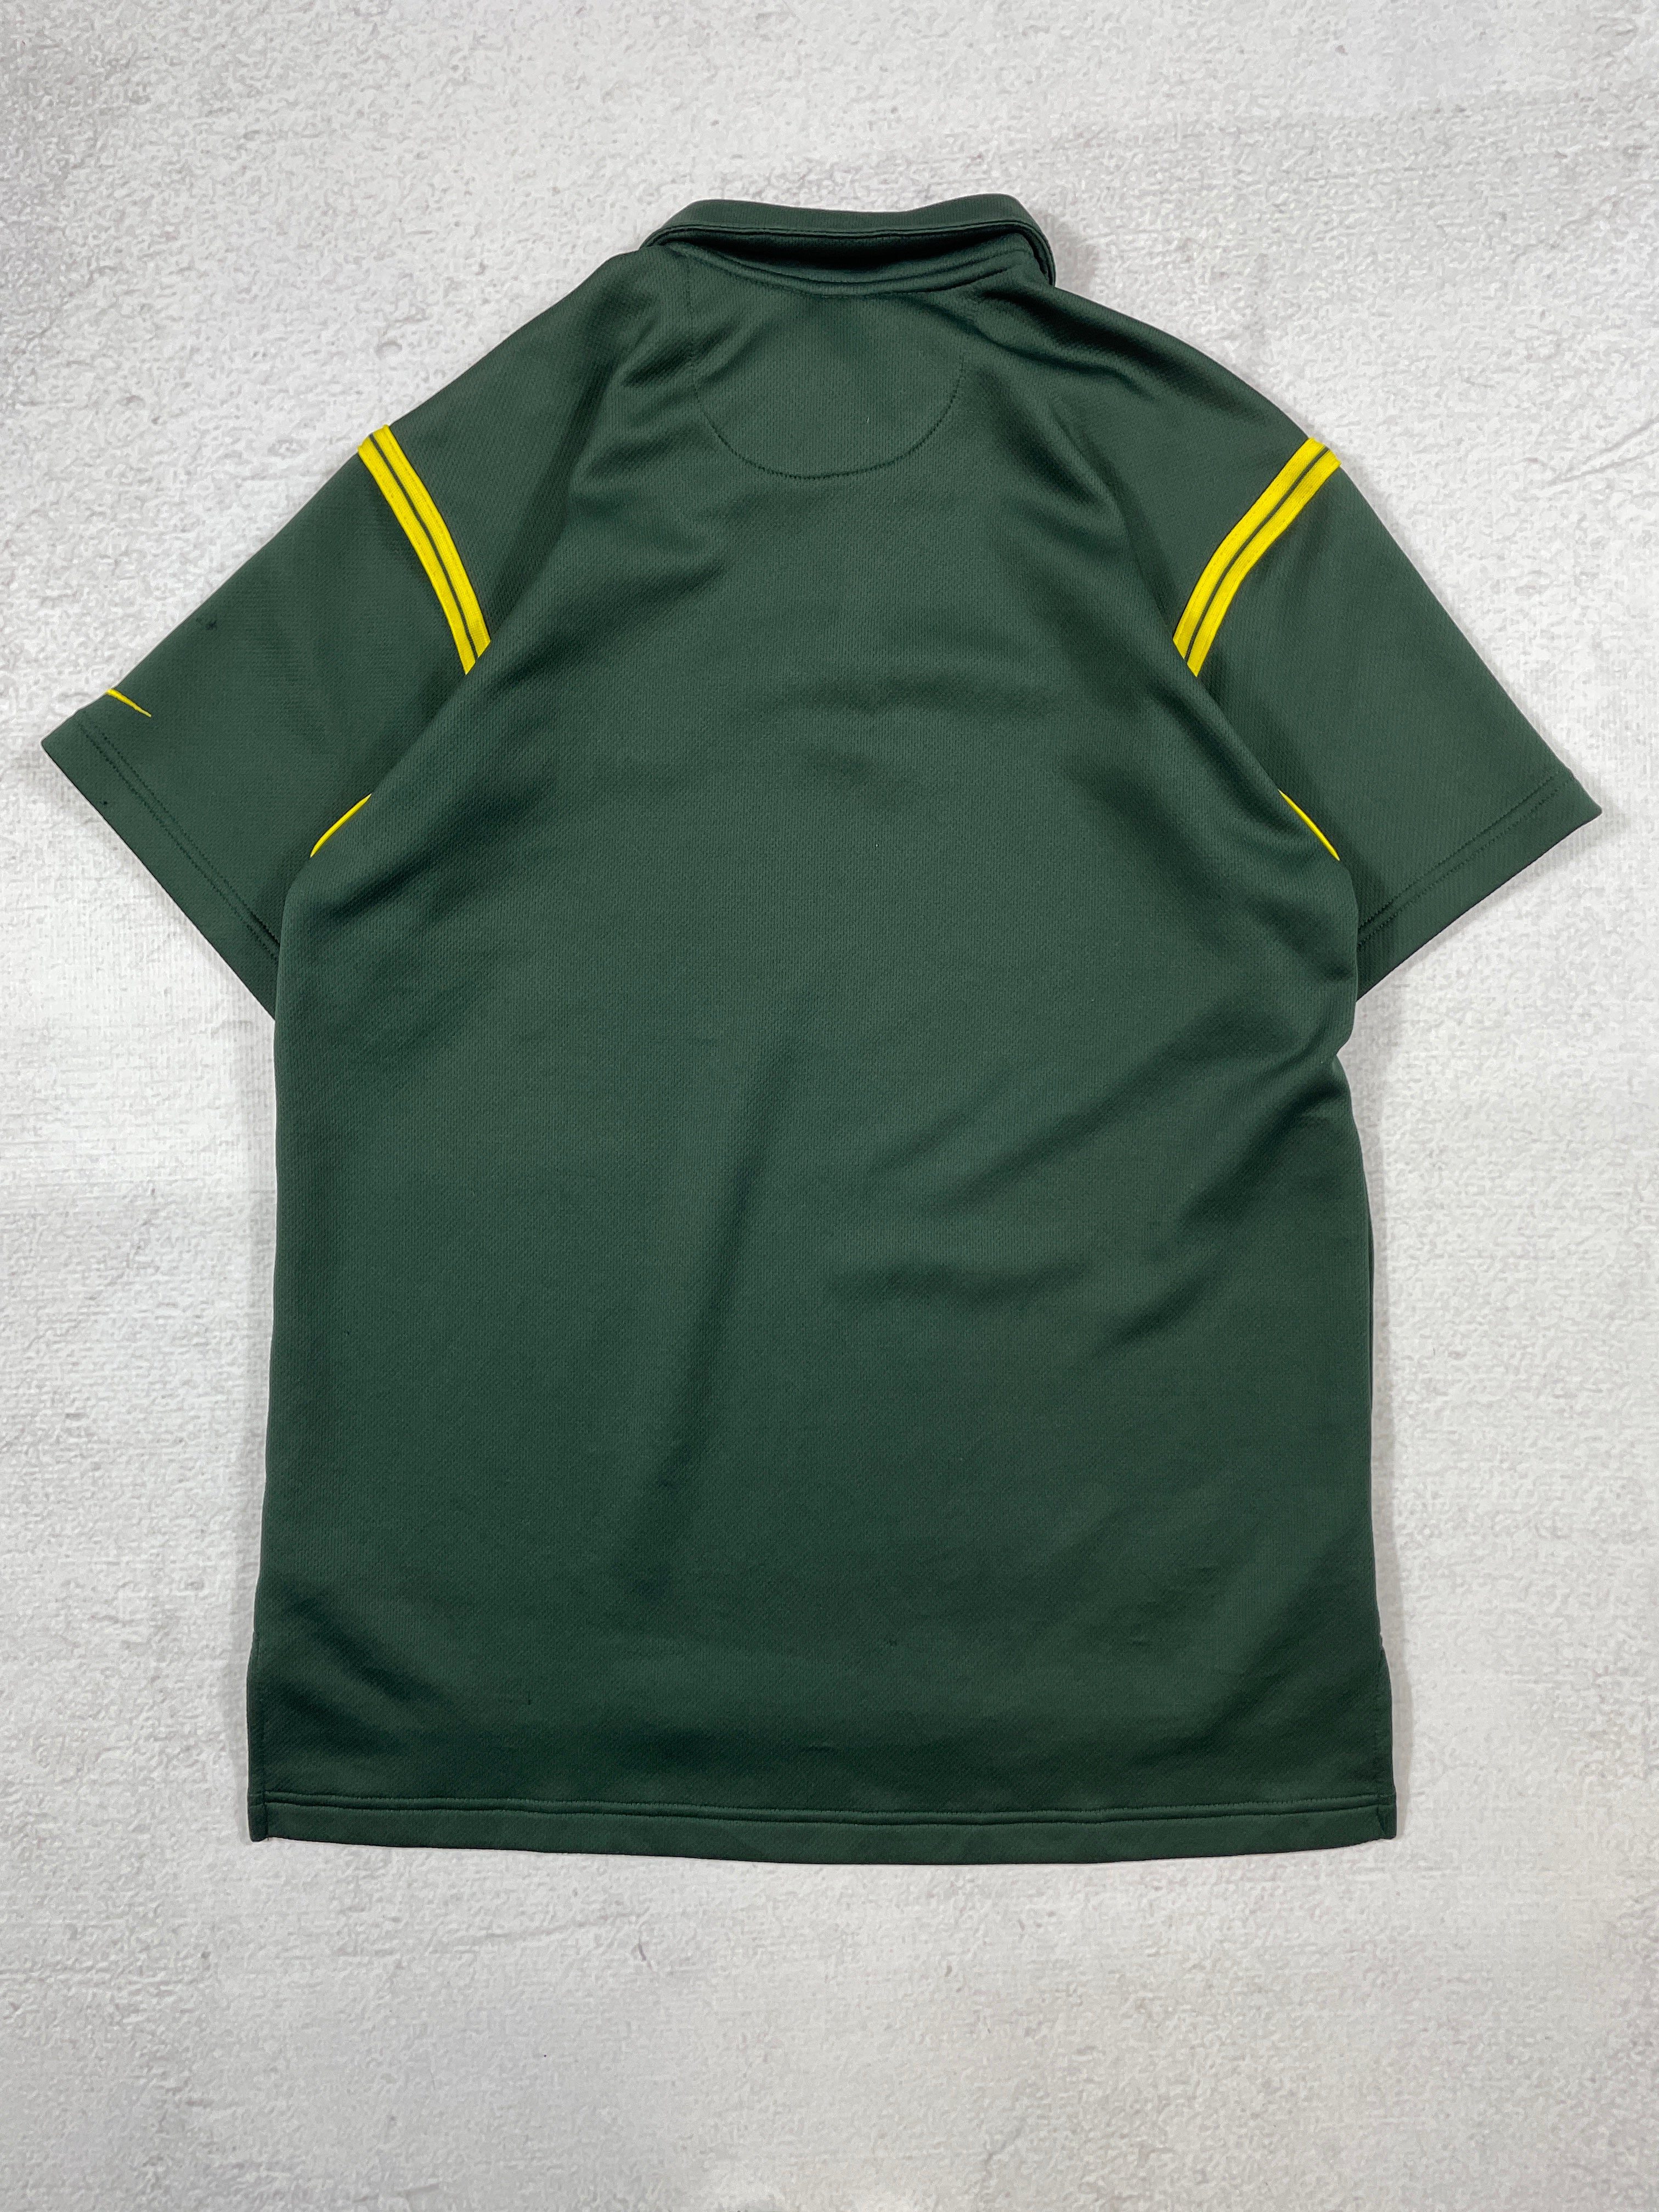 Vintage Nike Oregon State Polo Shirt - Men's Medium